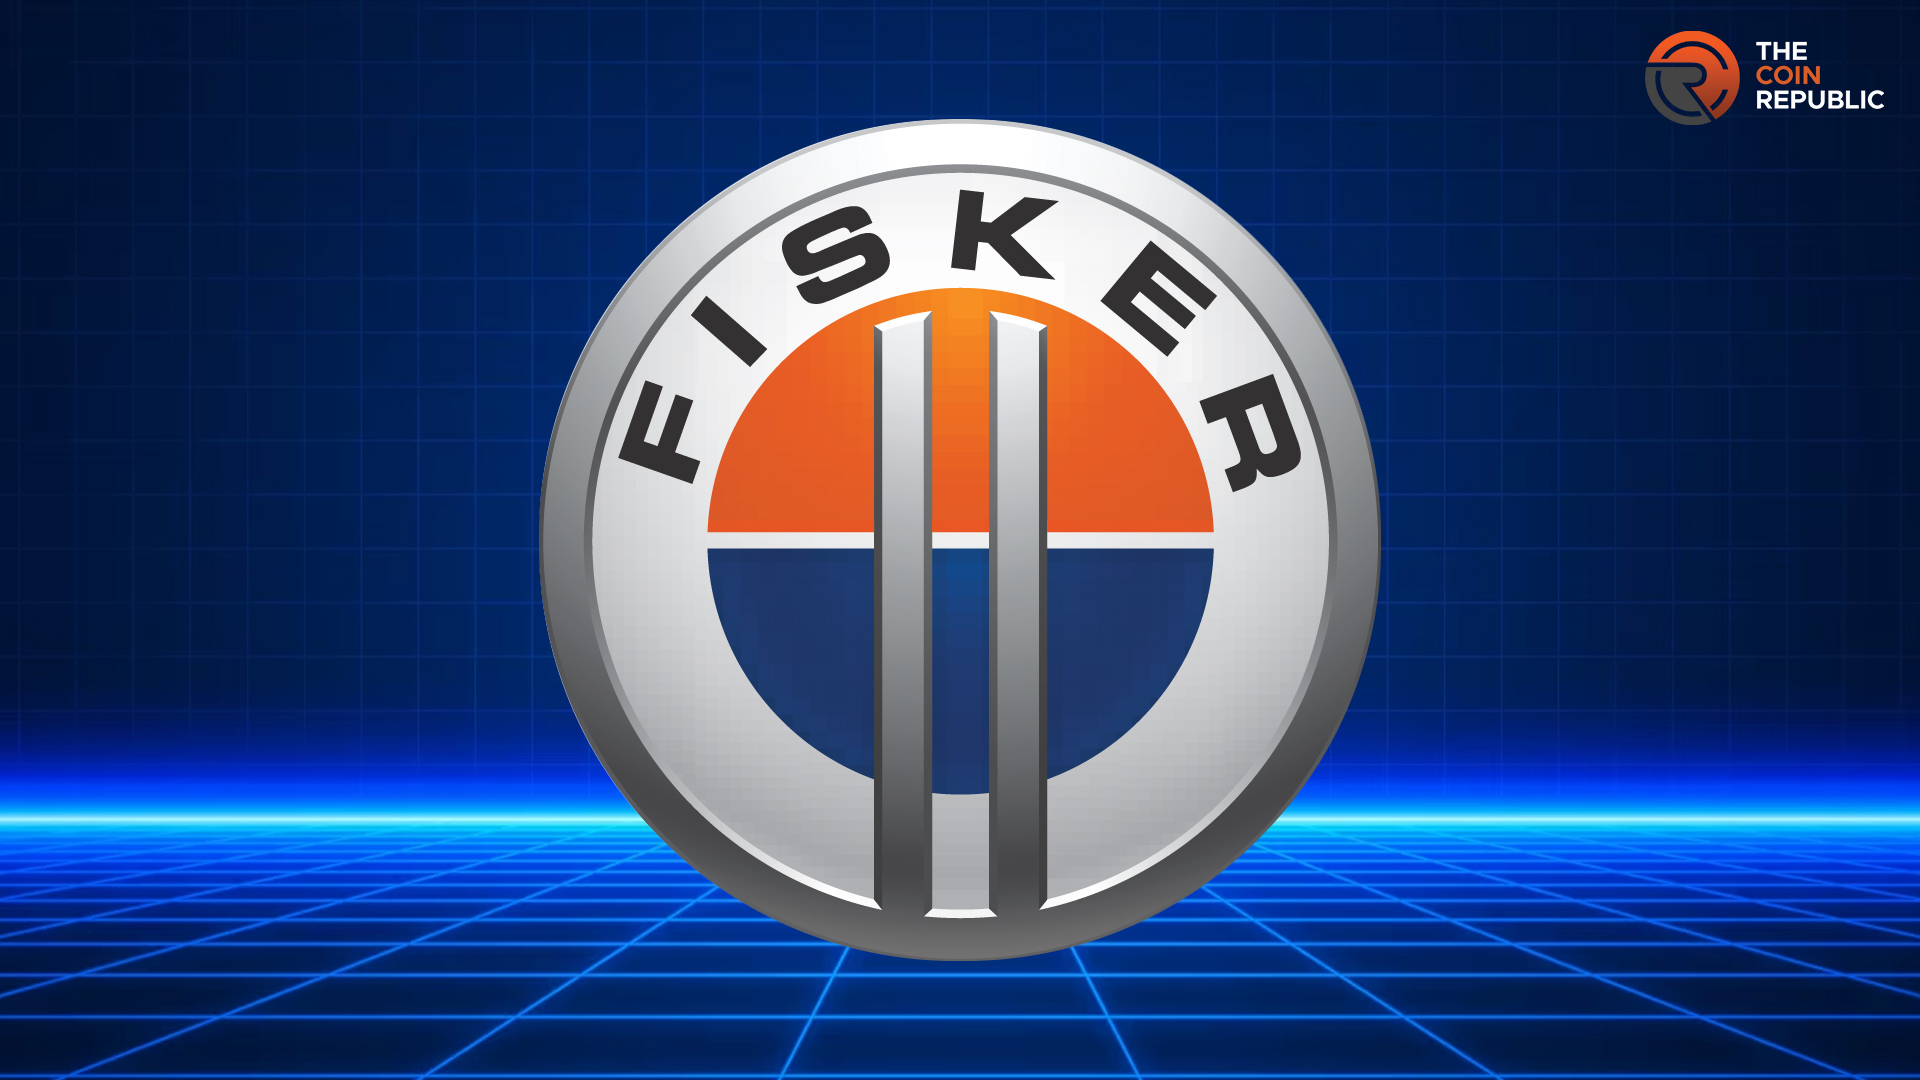 Fisker, Inc: FSR Stock Price Lost Momentum; Will it Retest $5?